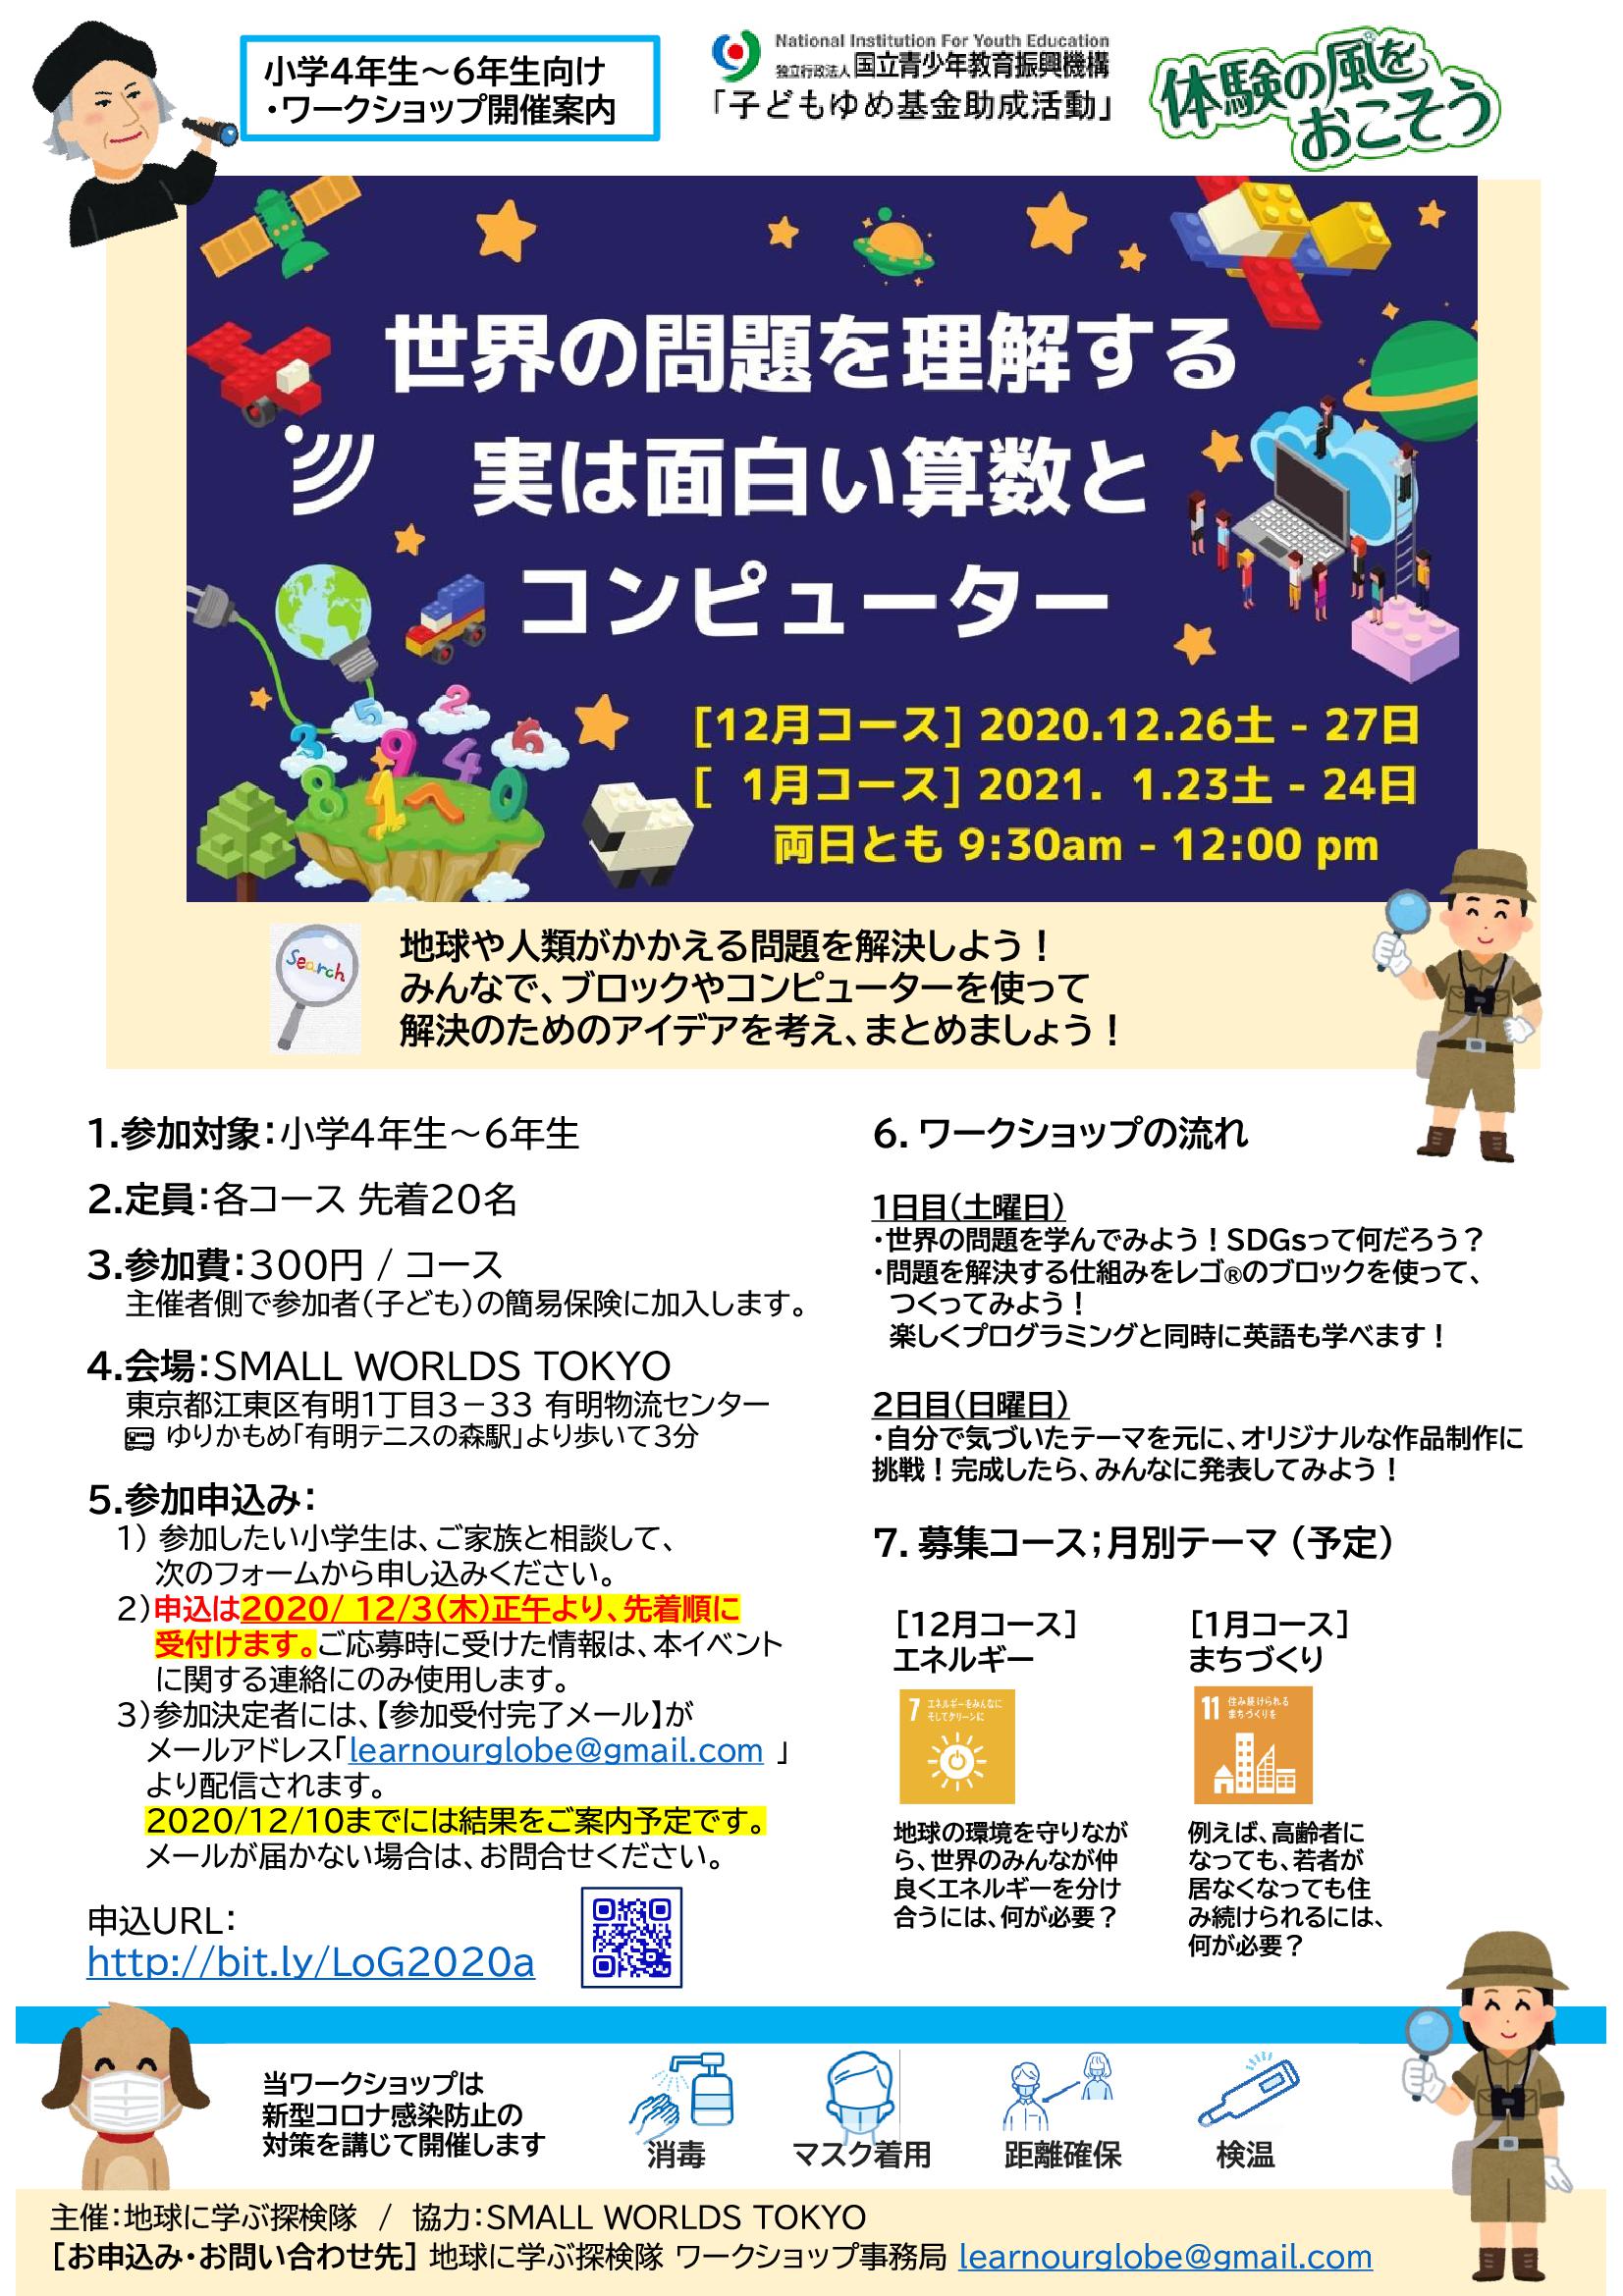 SMALL WORLDS TOKYO ワークショップ
「世界の問題を理解する　実はおもしろい算数とコンピューター」